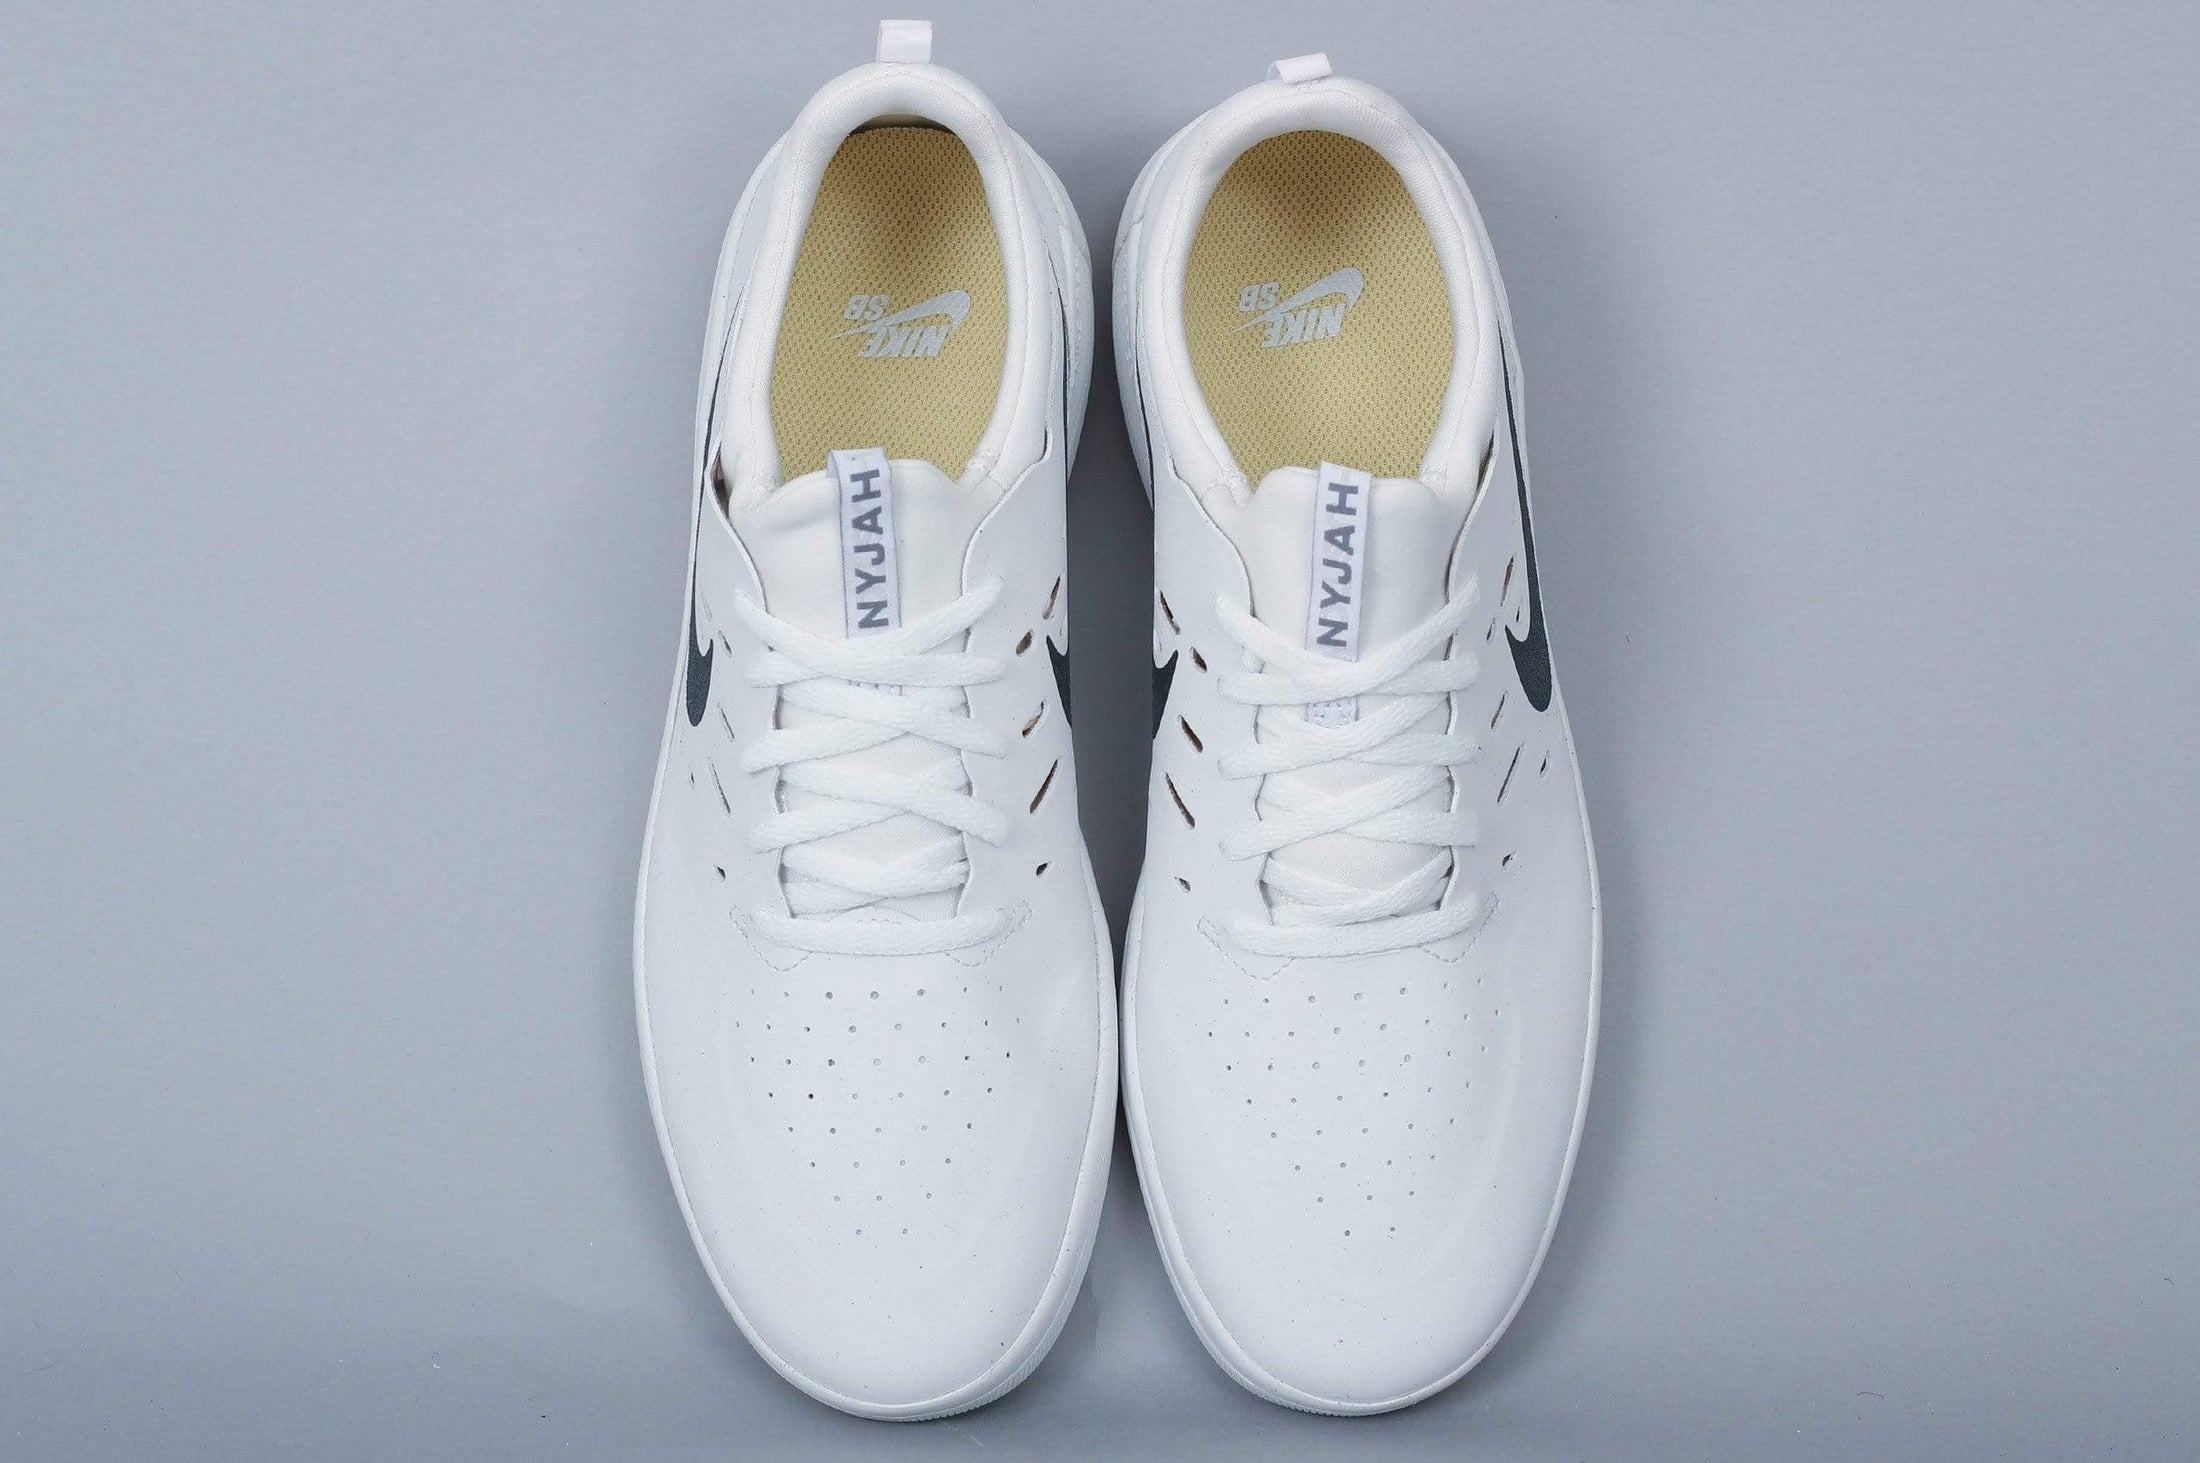 Nike SB Nyjah Free Shoes Summit White / Anthracite